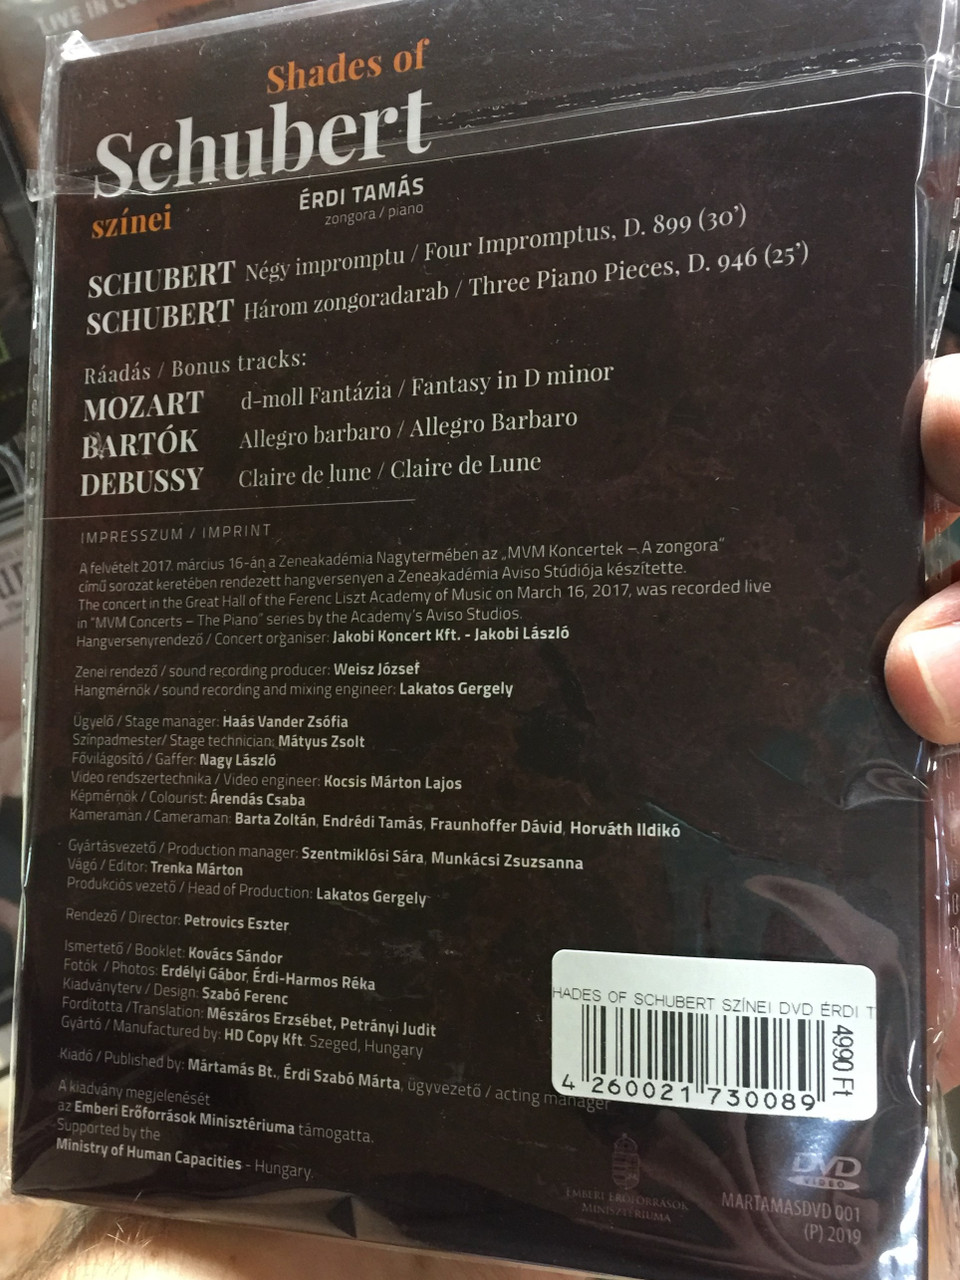 Shades of Schubert - Schubert színei DVD 2019 / Érdi Tamás piano - zongora  / Four impromptus, D.899, Three Piano Pieces D. 946 / Bonus tracks: Mozart  - Fantasy in D minor,